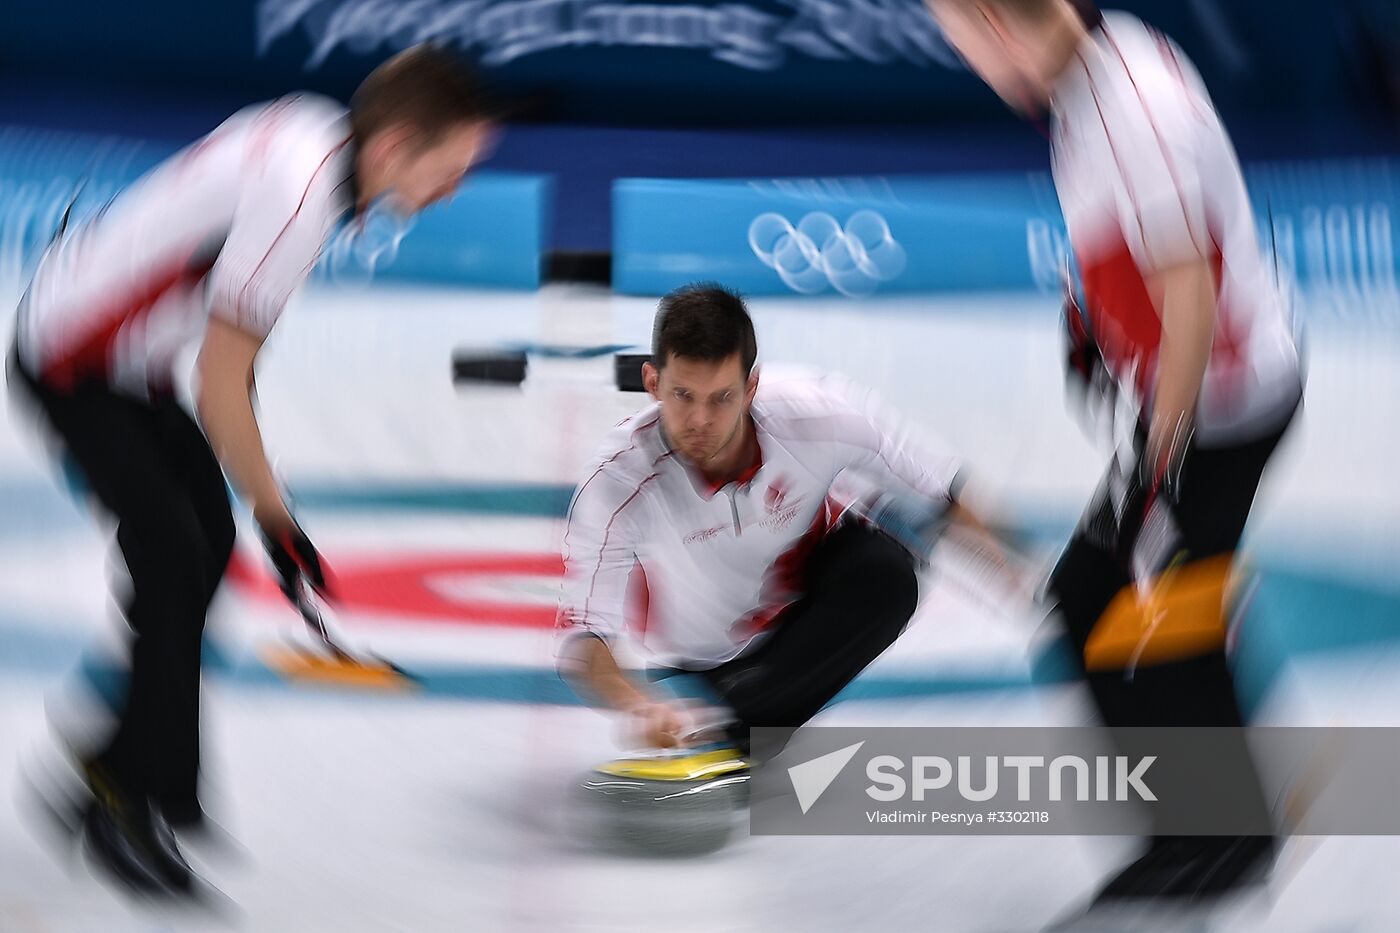 2018 Winter Olympics. Curling. Men. Day Five